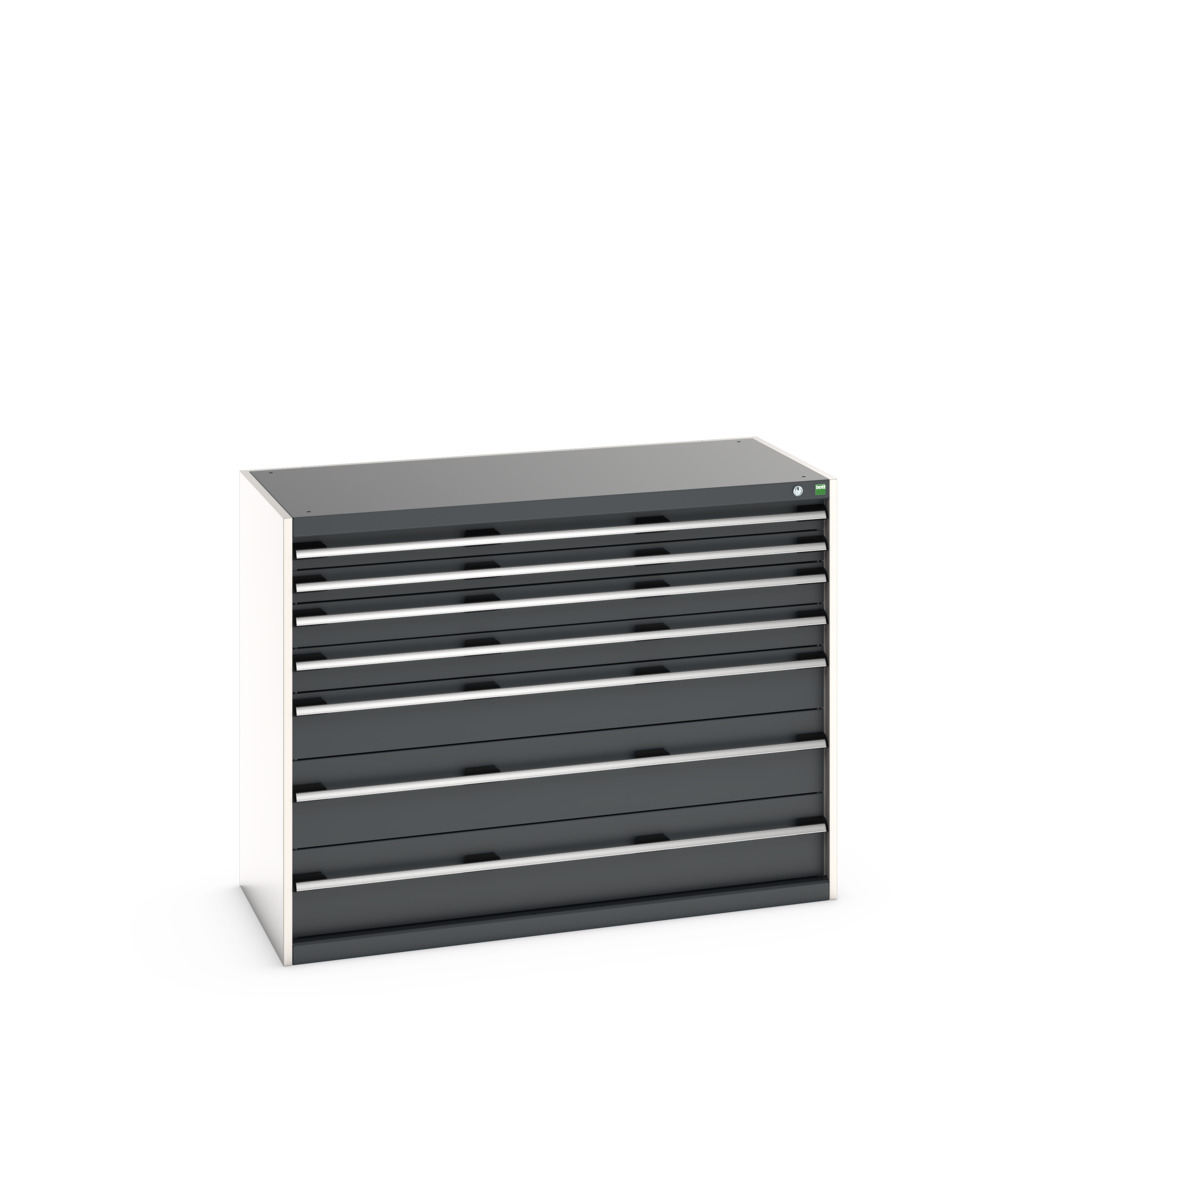 40022125. - cubio drawer cabinet